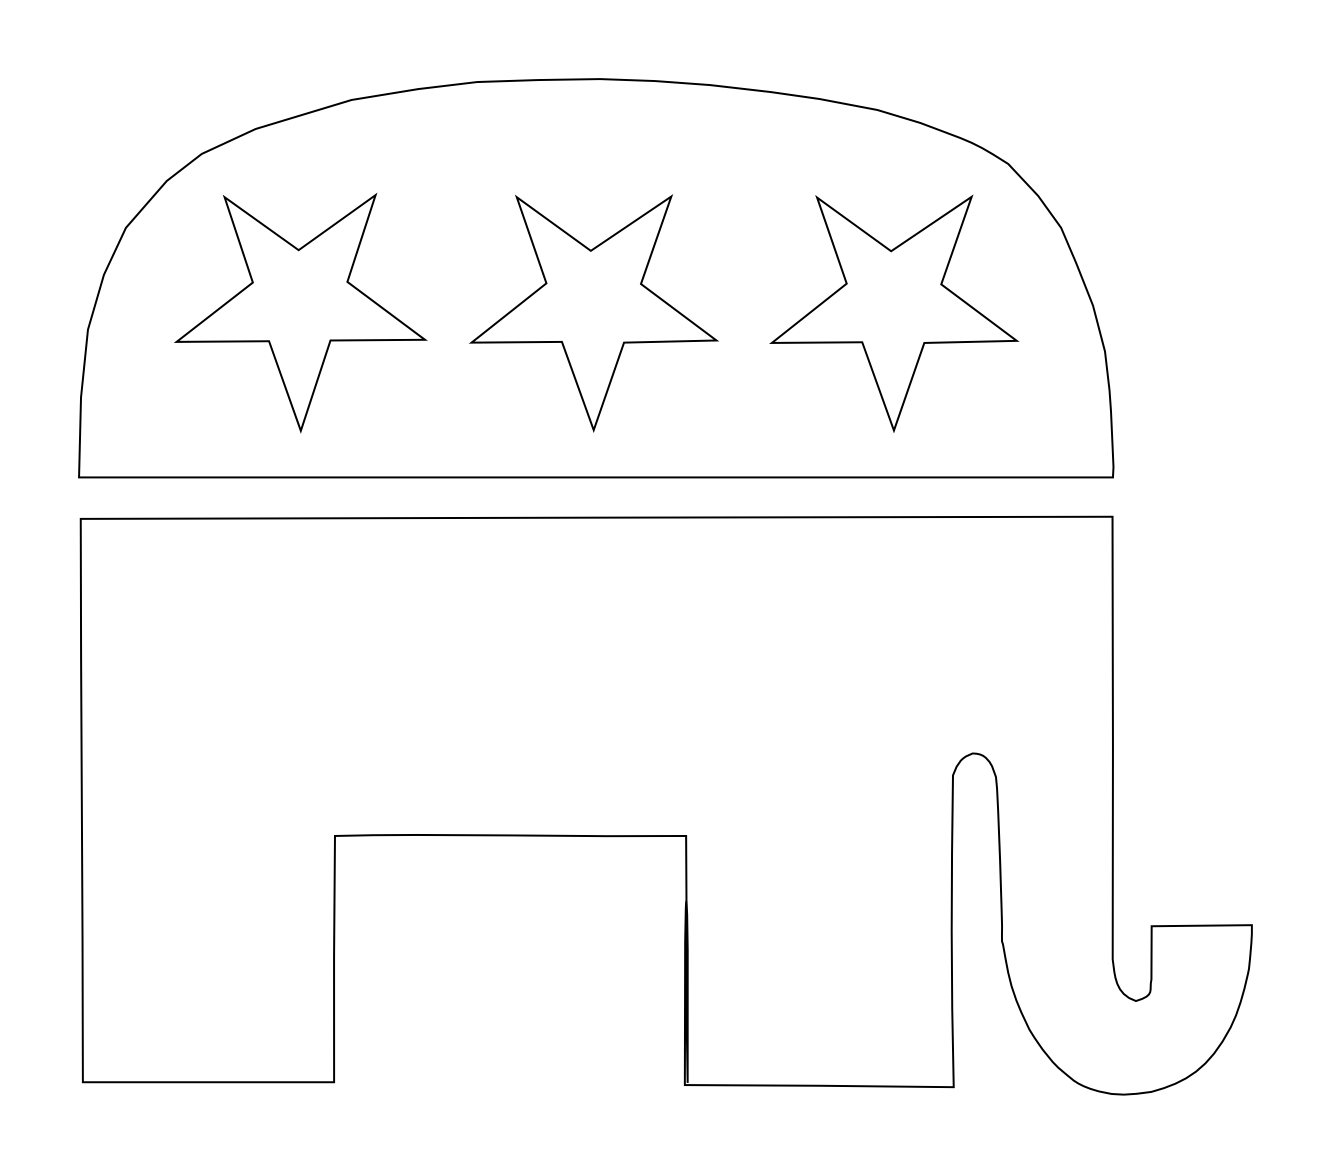 Pix For > Republican Party Elephant Outline